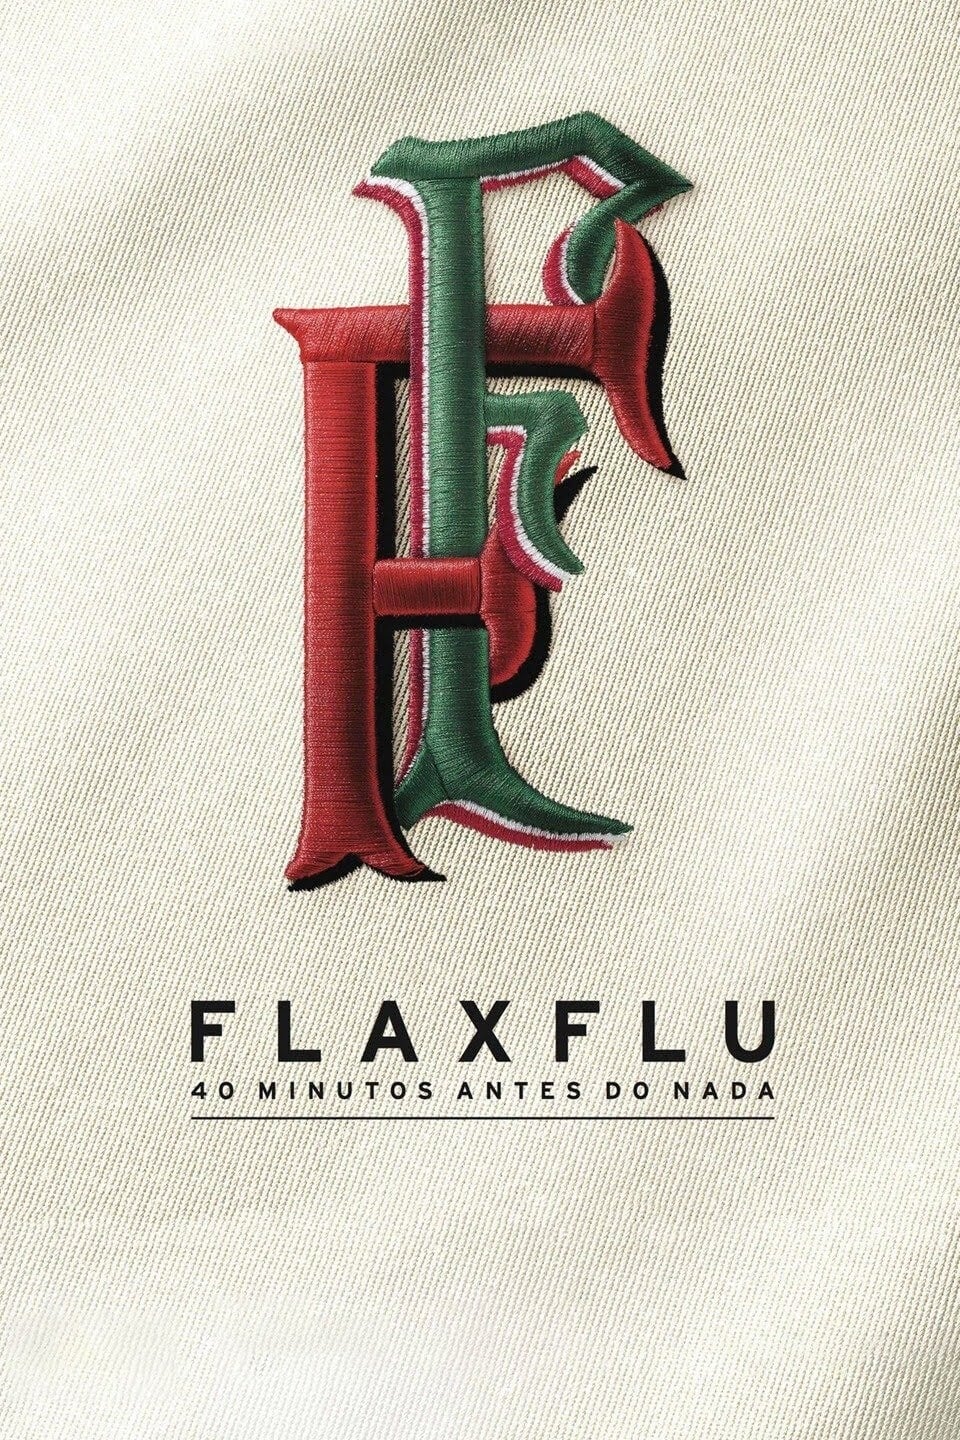 Fla x Flu - 40 Minutos Antes do Nada